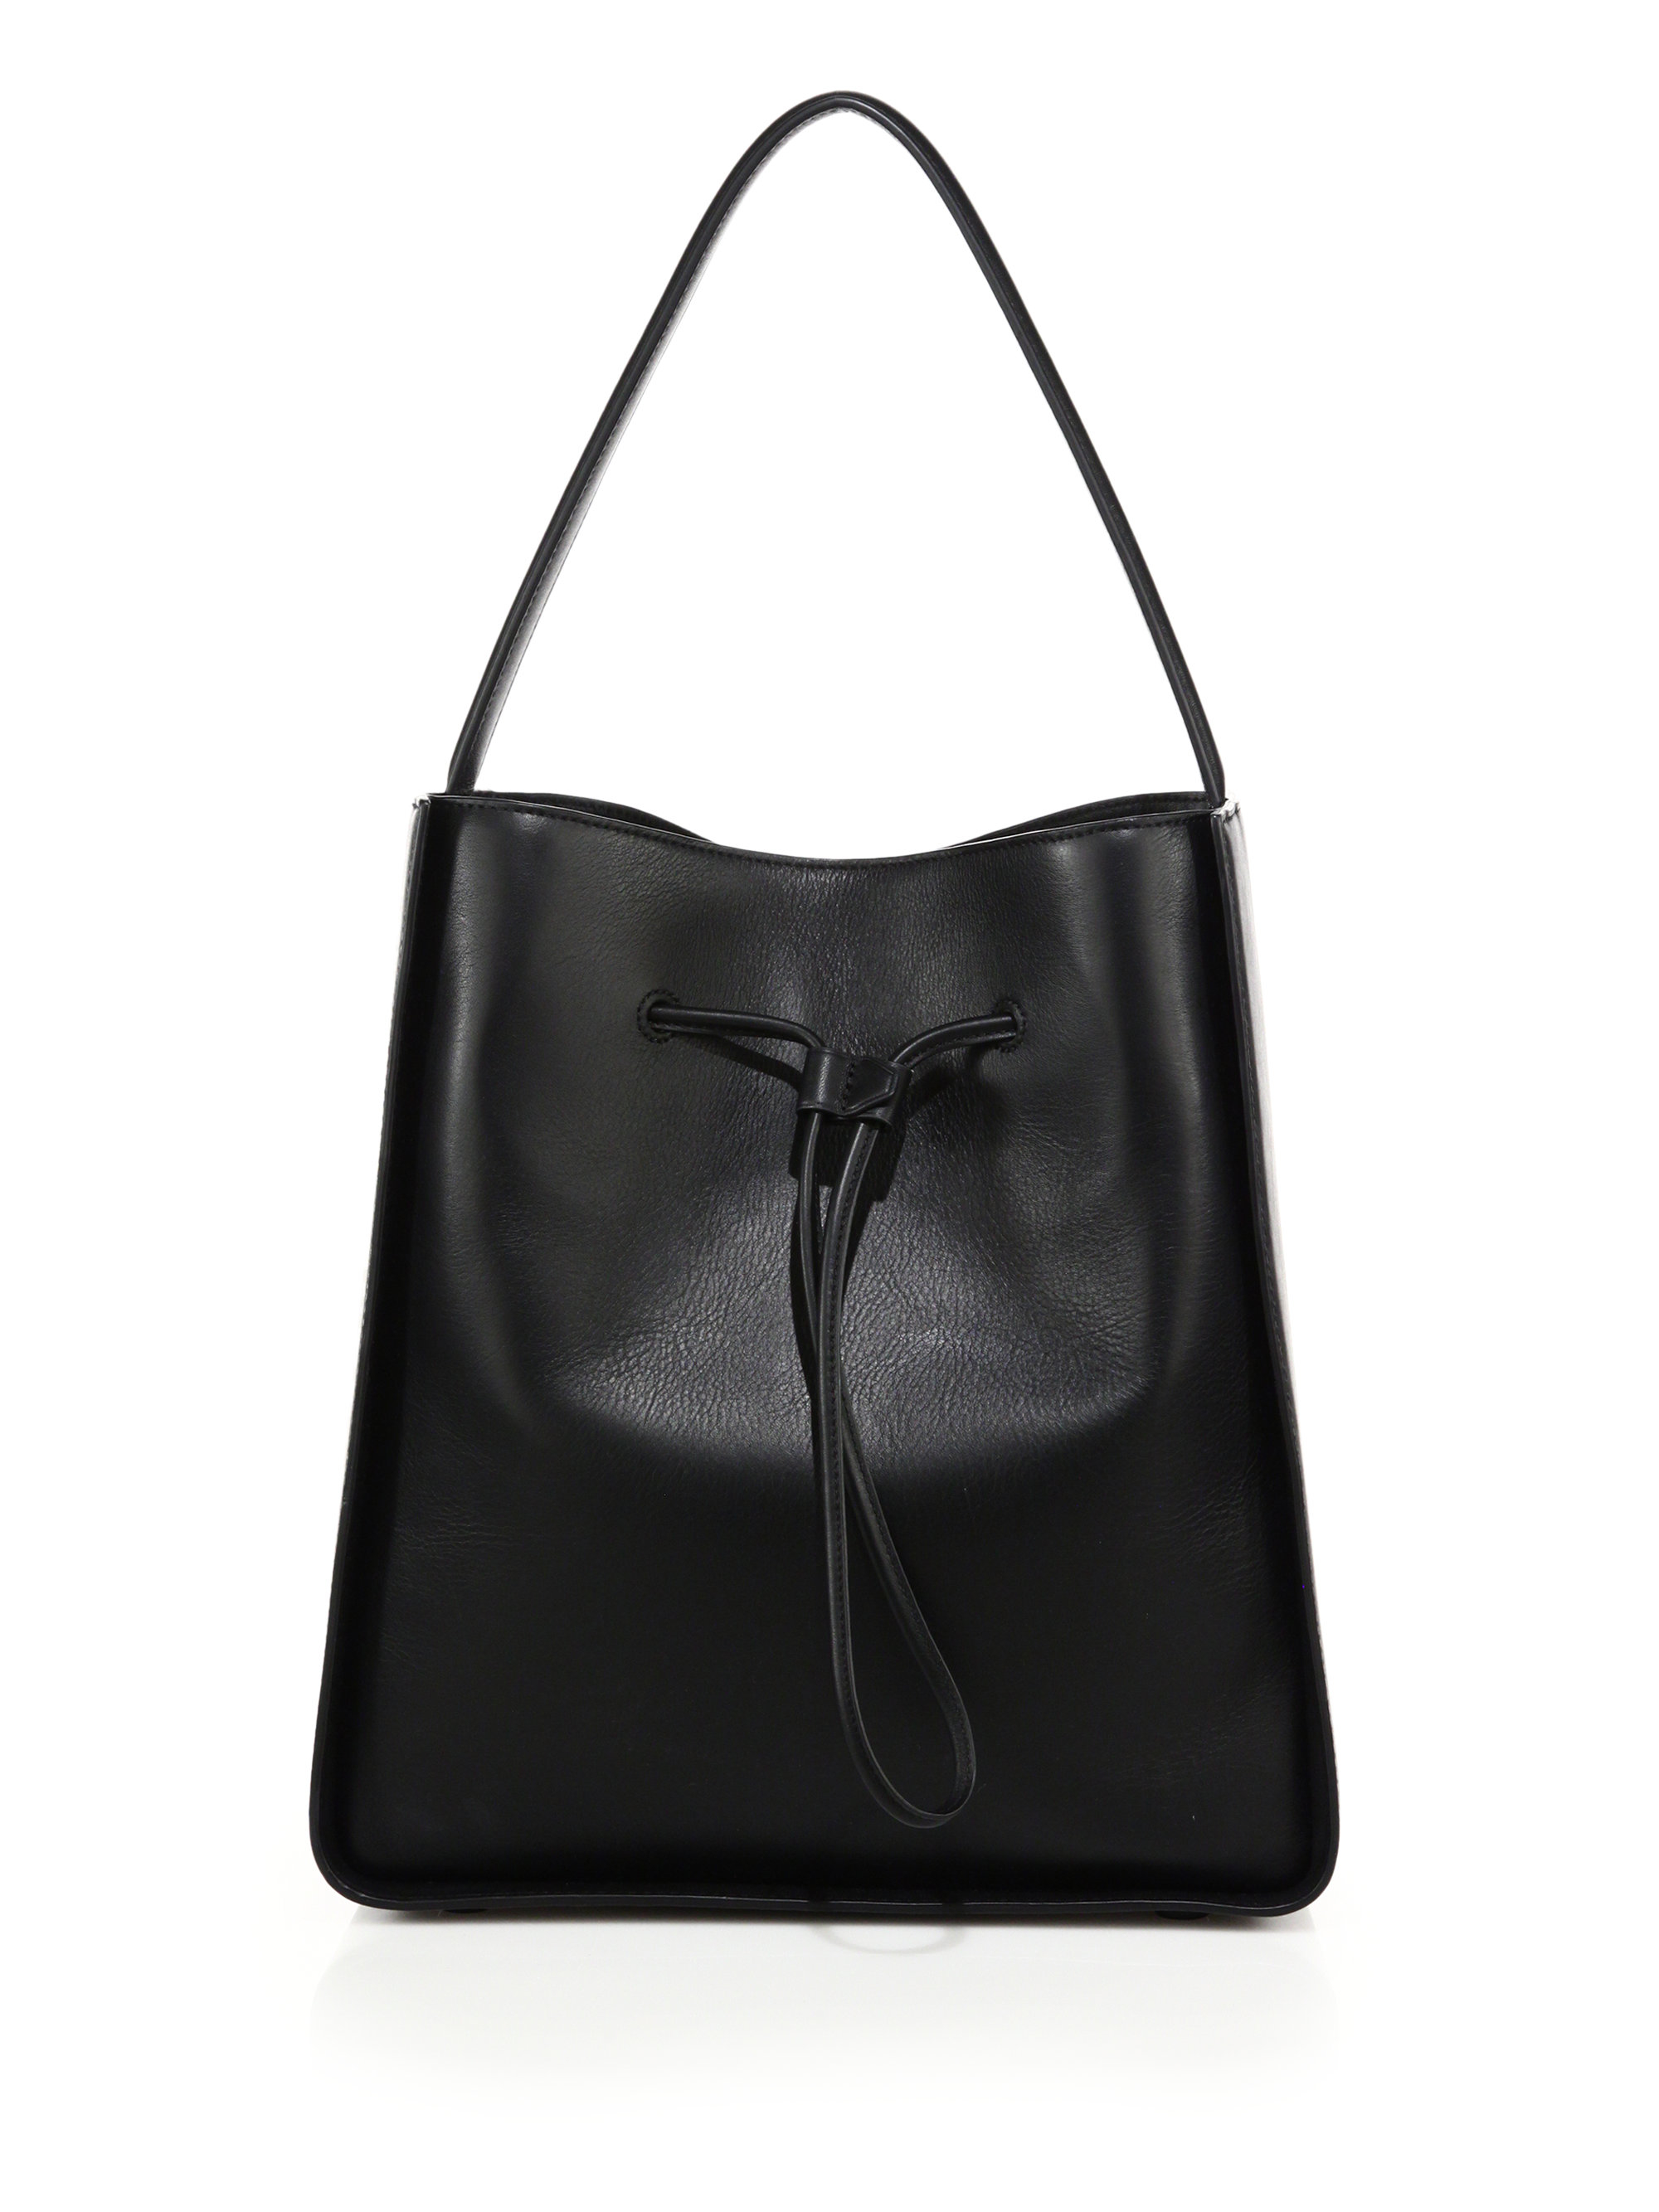 3.1 phillip lim Soleil Large Leather Drawstring Bucket Bag in Black | Lyst